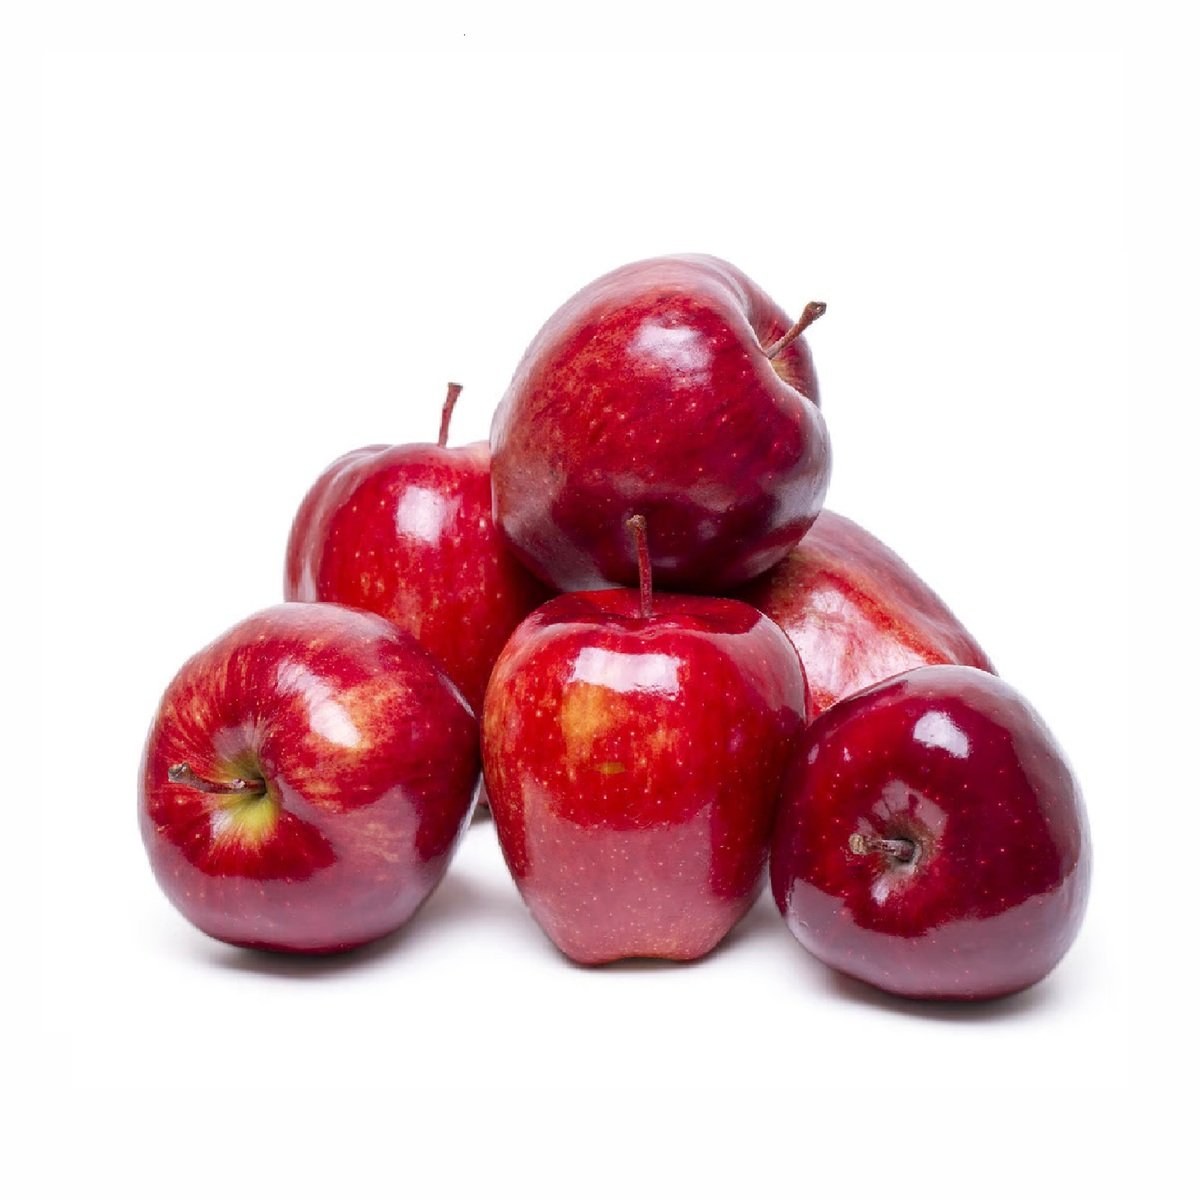 تفاح أحمر لبناني ، صندوق